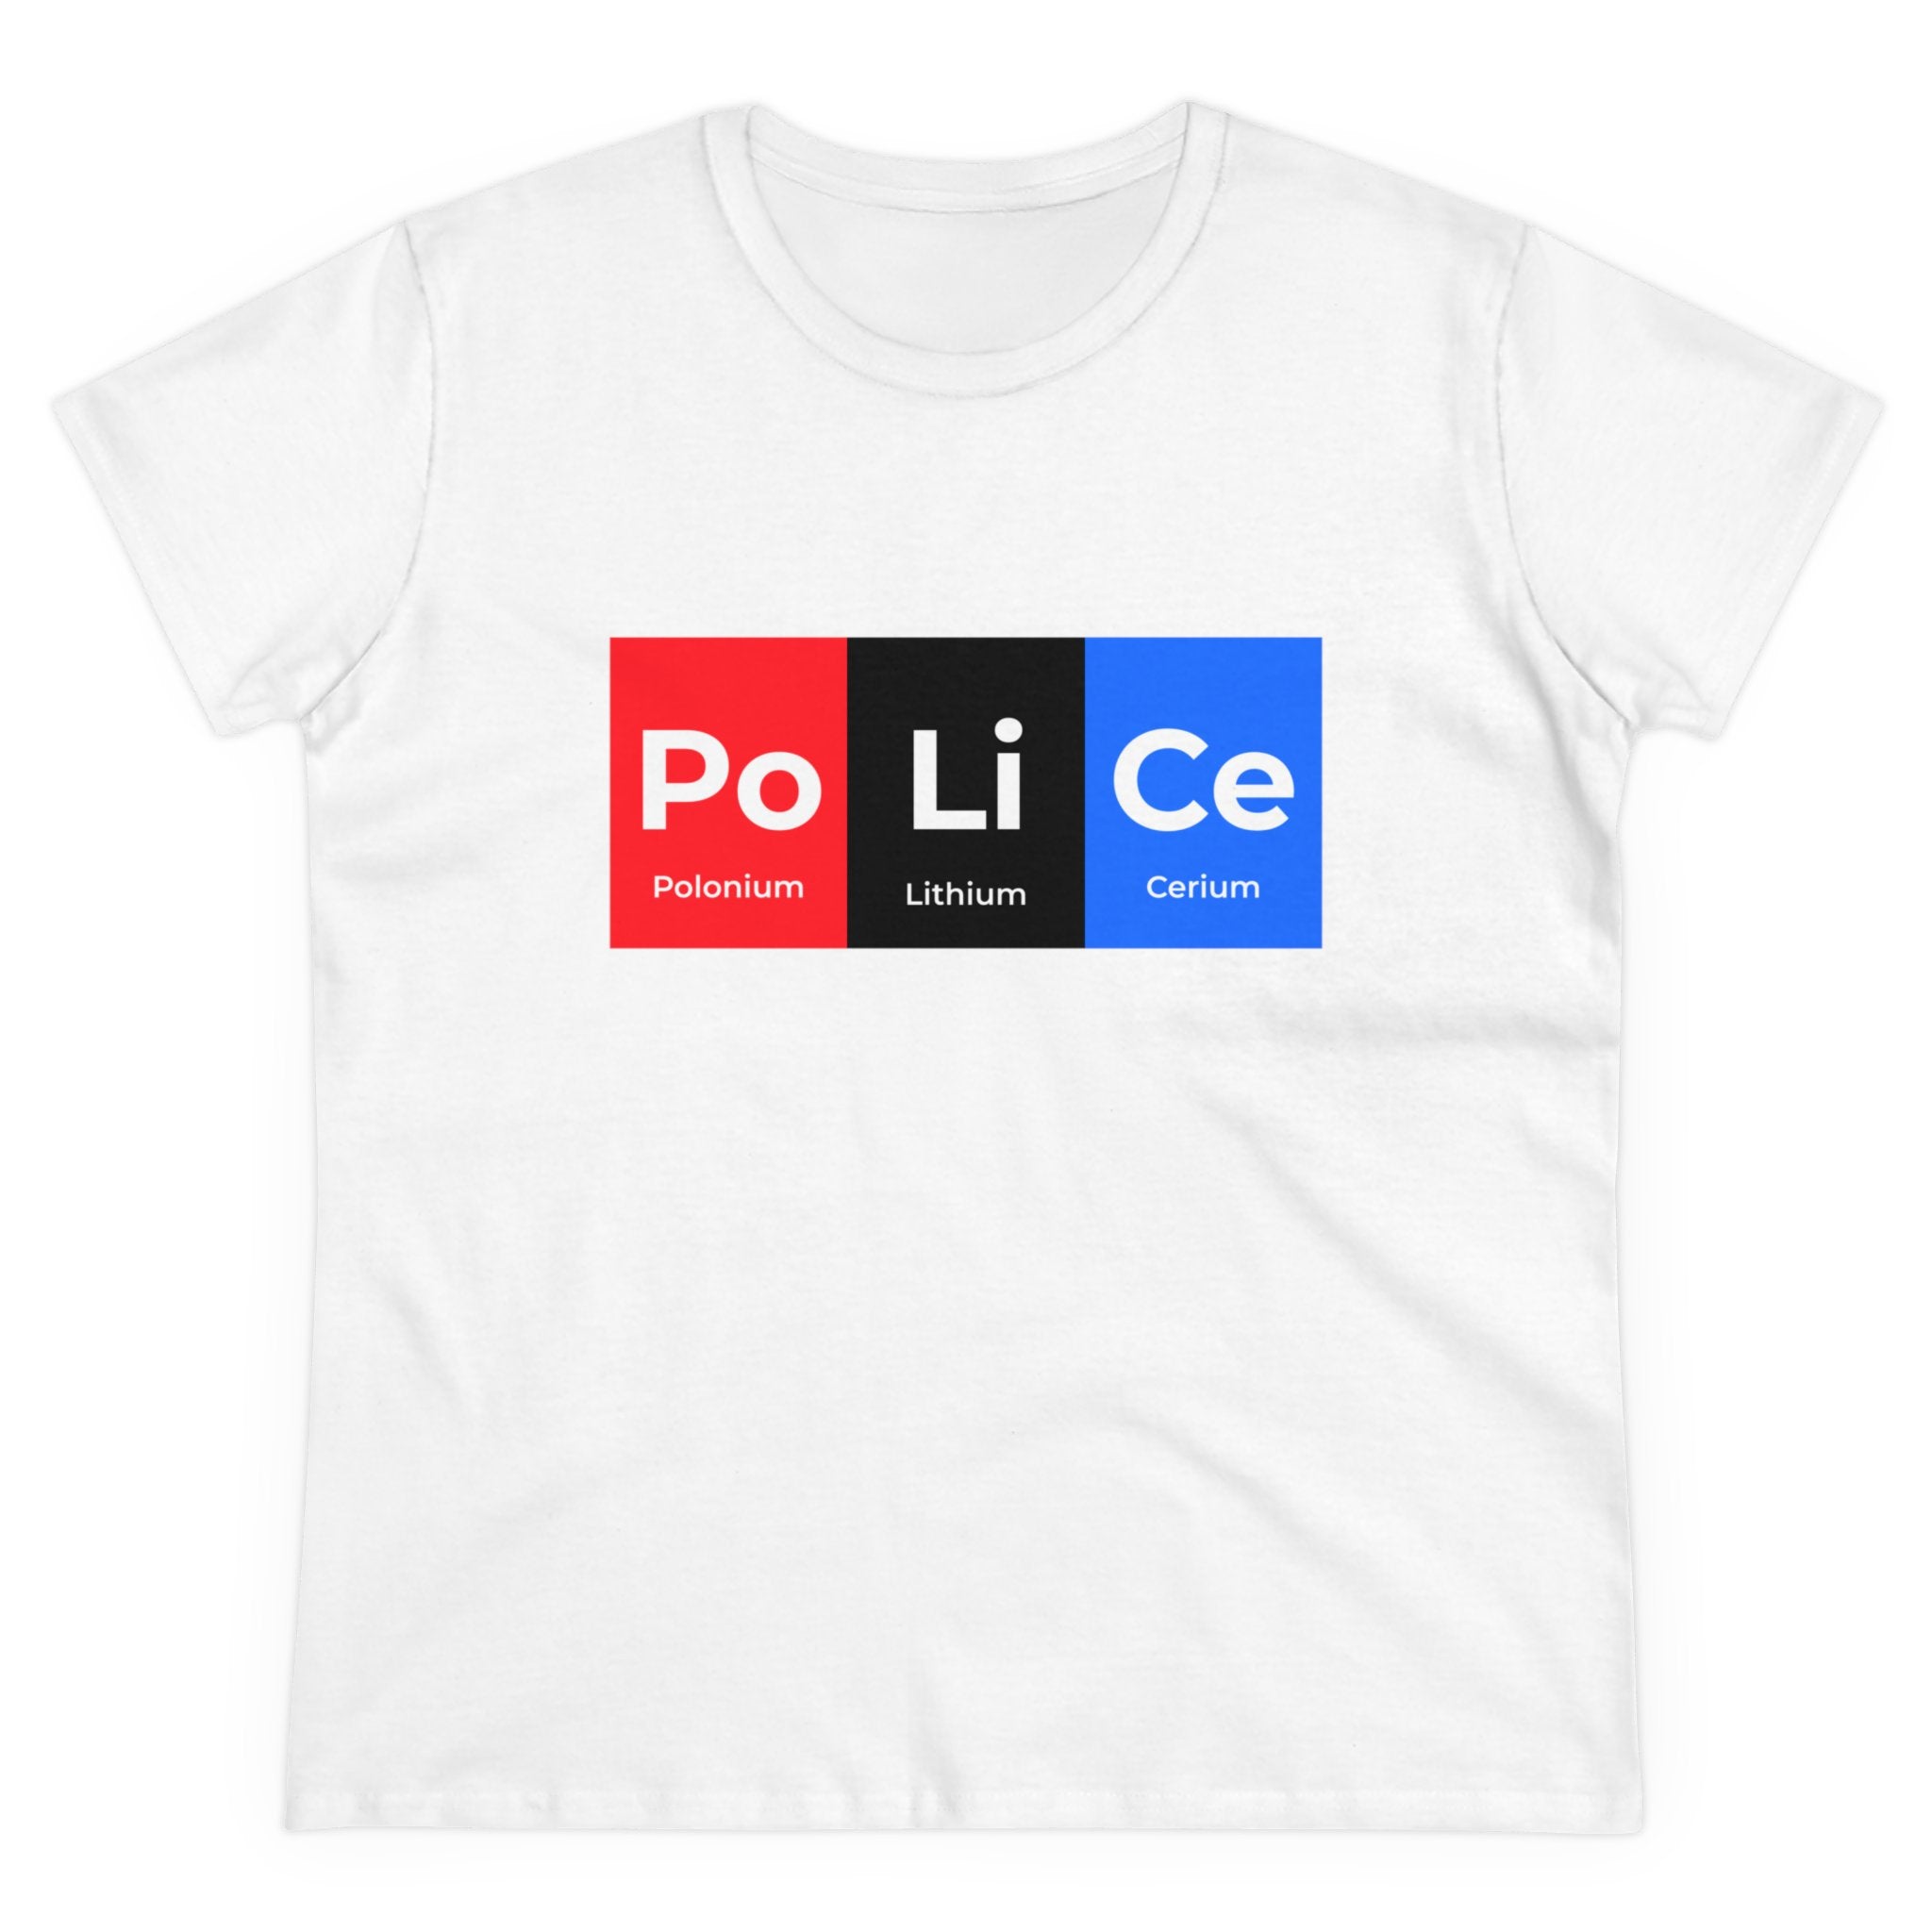 White women's tee with text designed to resemble periodic table symbols. It reads "Po Li Ce" and corresponds to Polonium (Po), Lithium (Li), and Cerium (Ce). This eco-friendly Po-Li-Ce - Women's Tee showcases unique Po-Li-Ce designs.